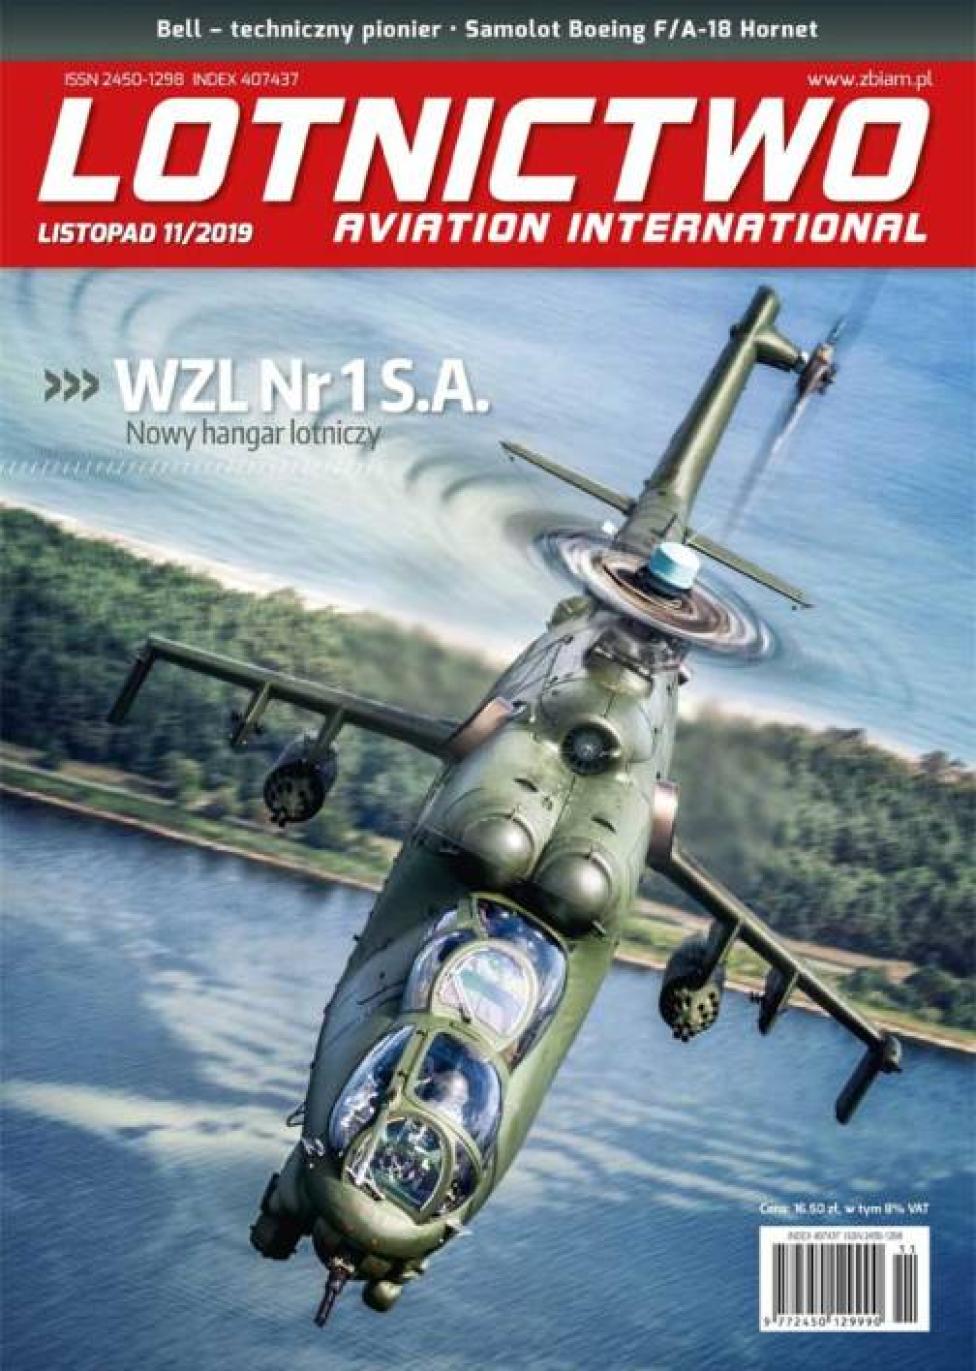 Lotnictwo Aviation International 11/2019